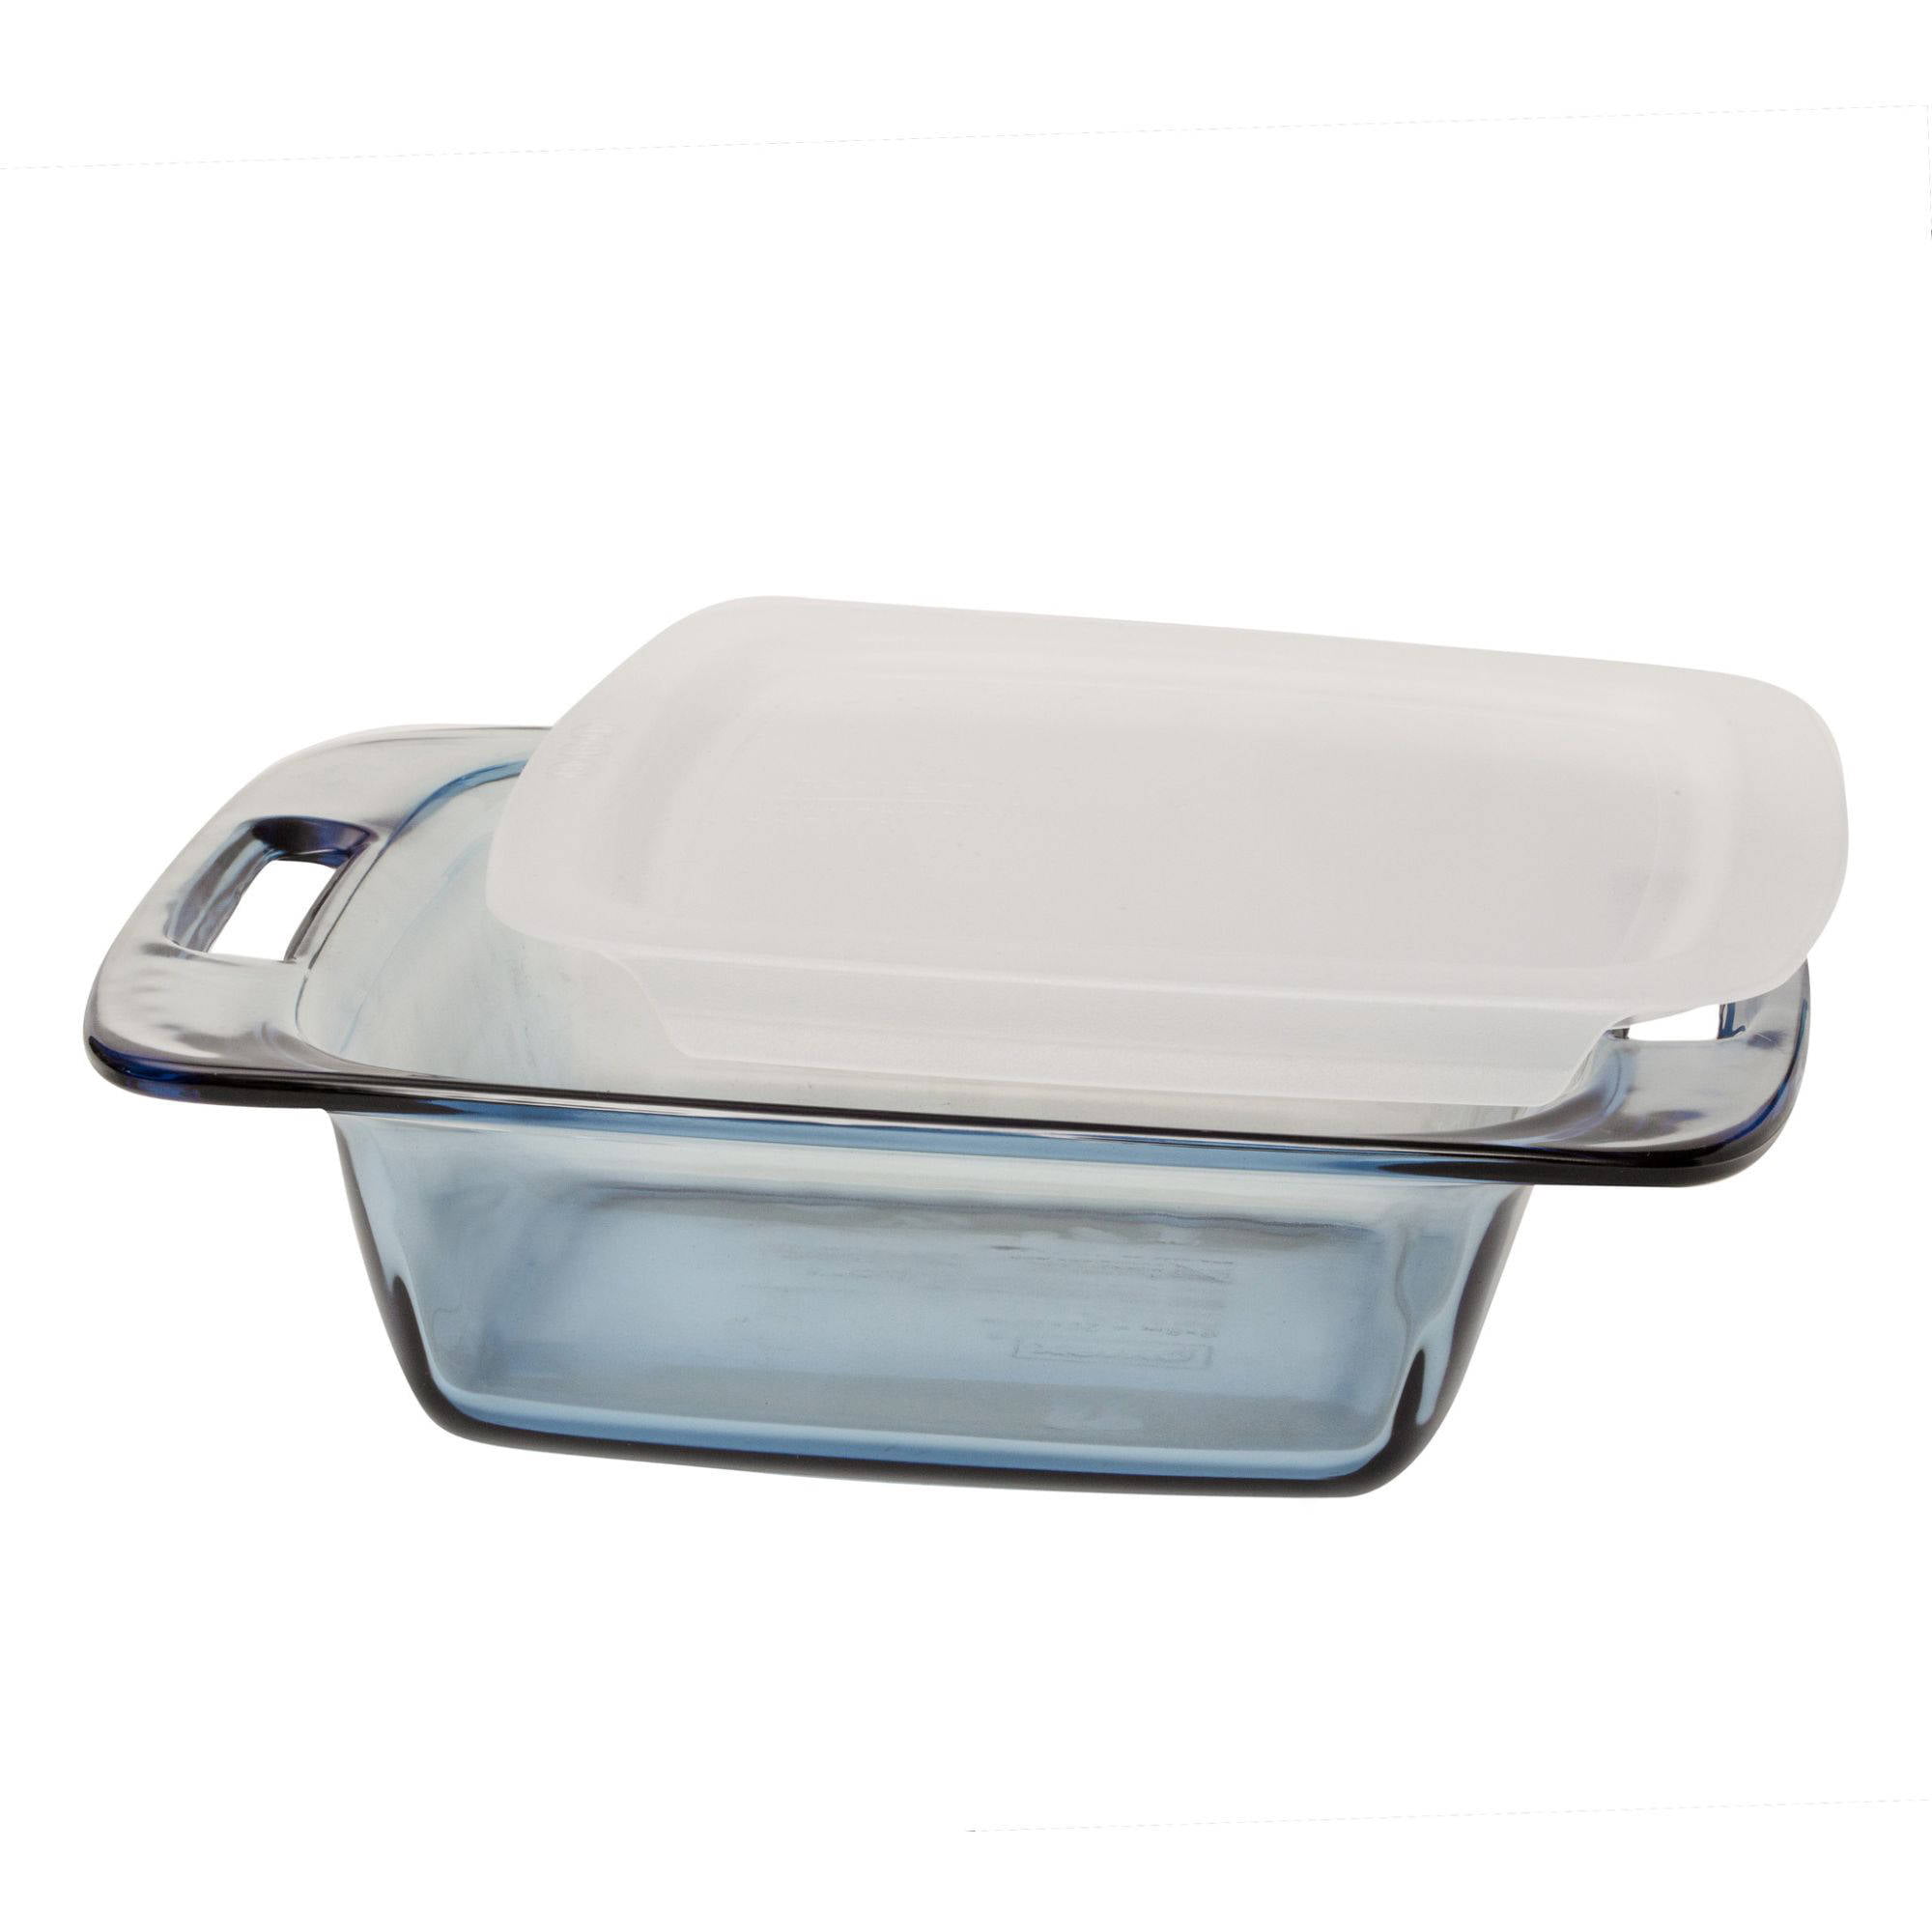 Pyrex Easy Grab Baking Dish Set - Clear/Blue, 5 pc - Kroger